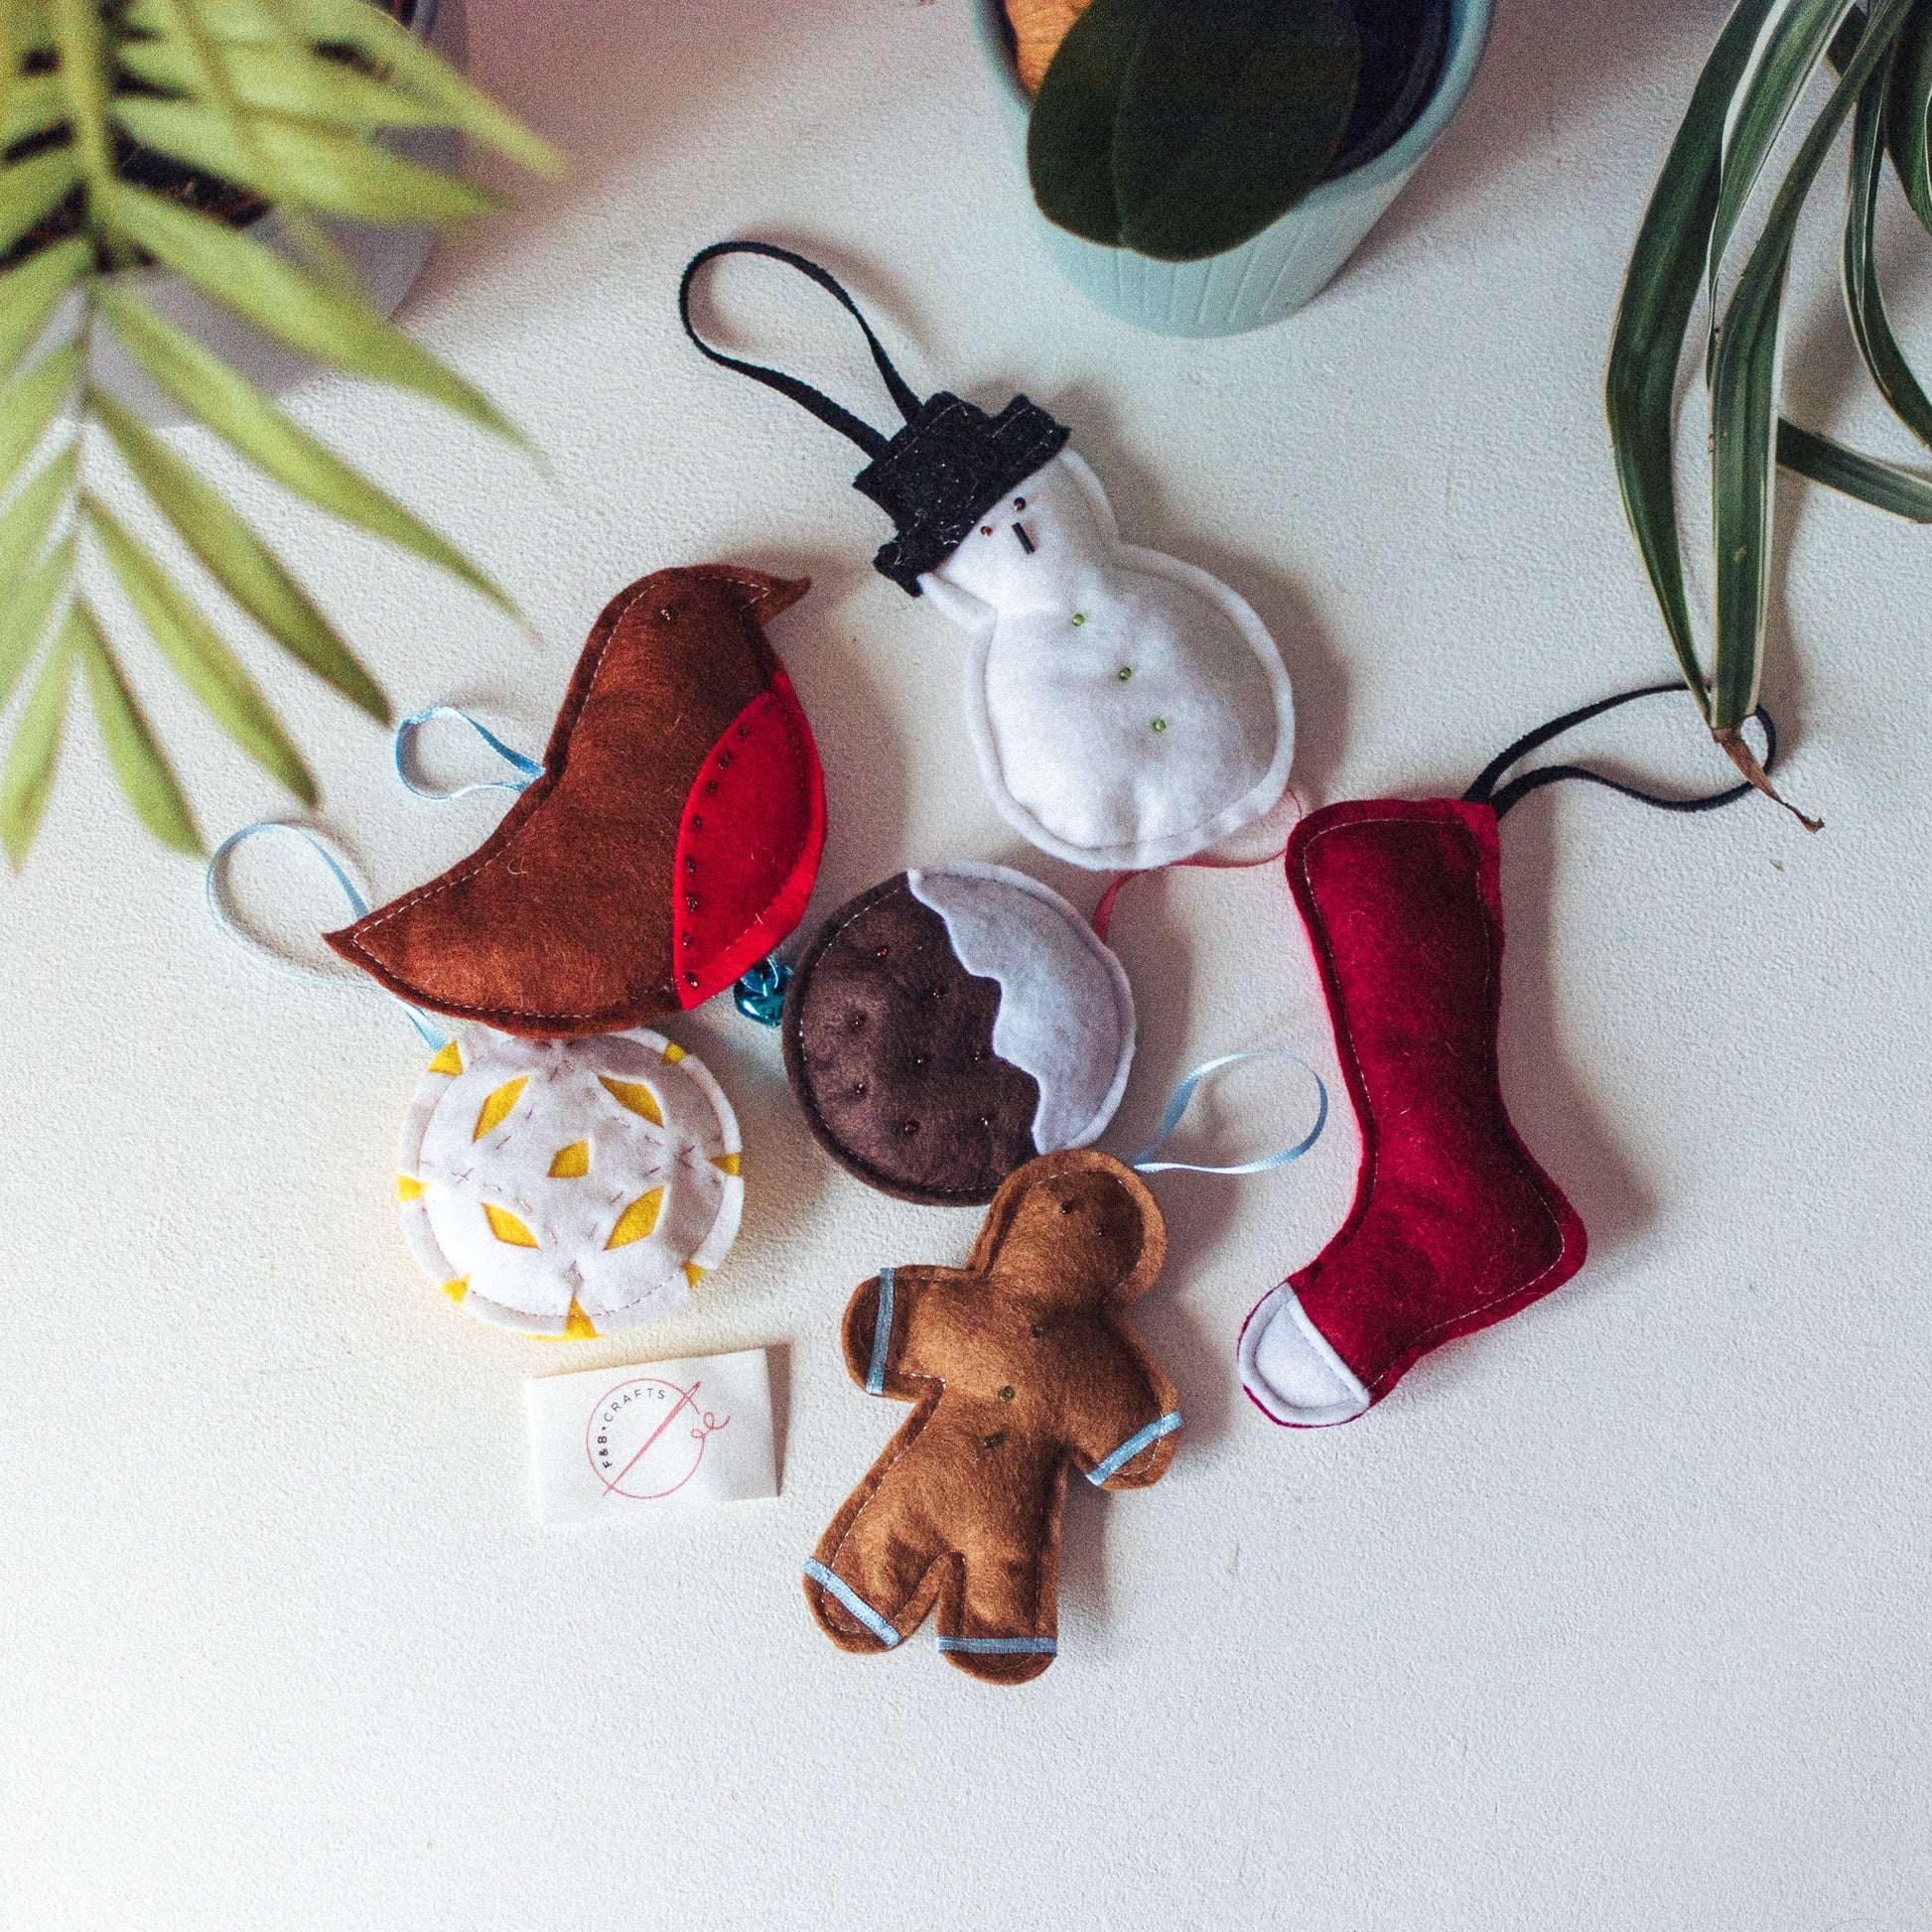 Gingerbread Man Ornament: A handmade gingerbread man felt ornament, perfect for holiday decor.